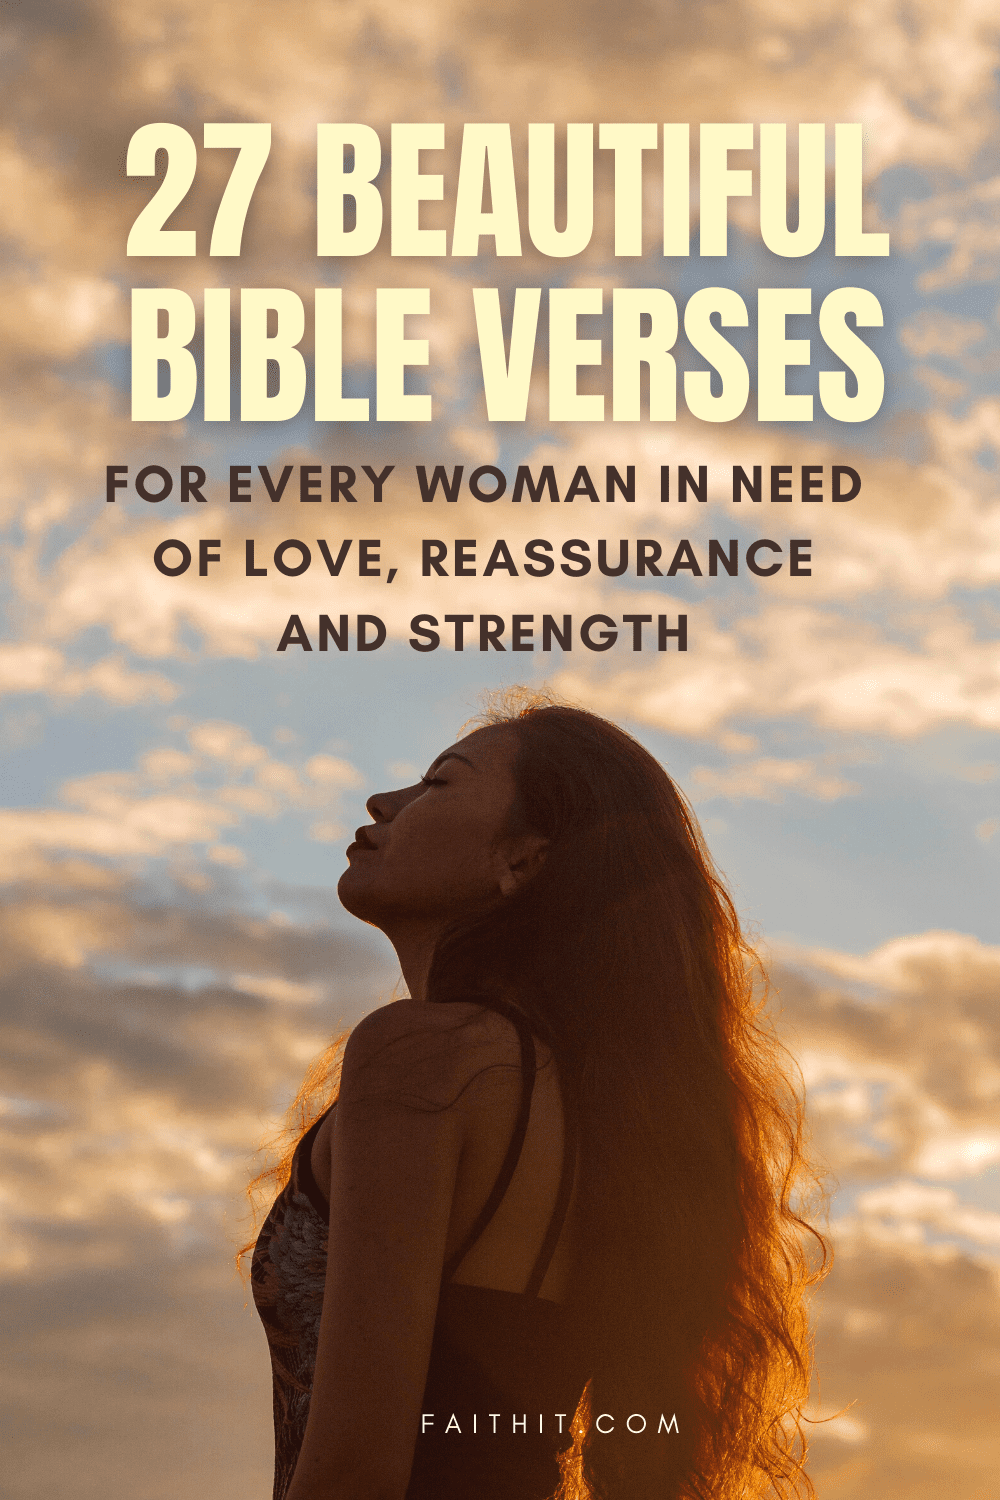 Bible verses for women